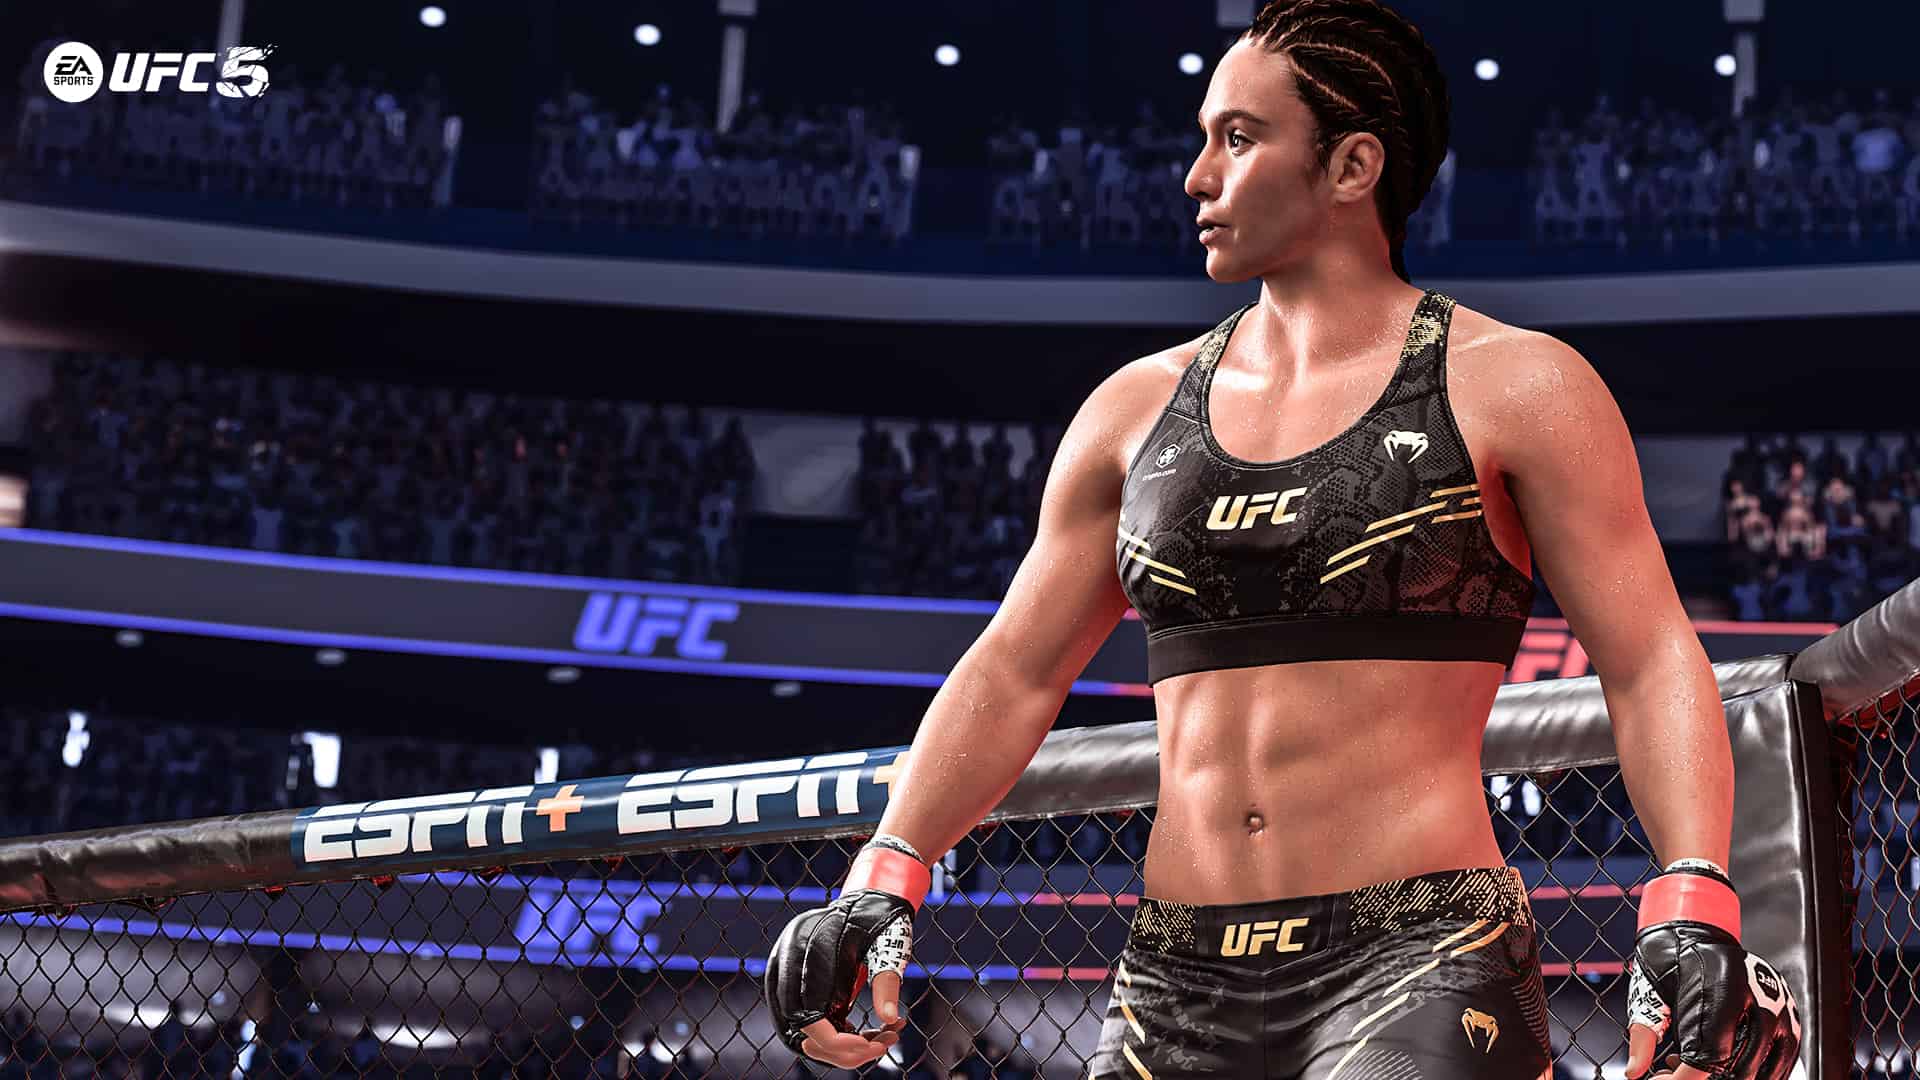 UFC 5 women's fighting game screenshot featuring elbow strikes.